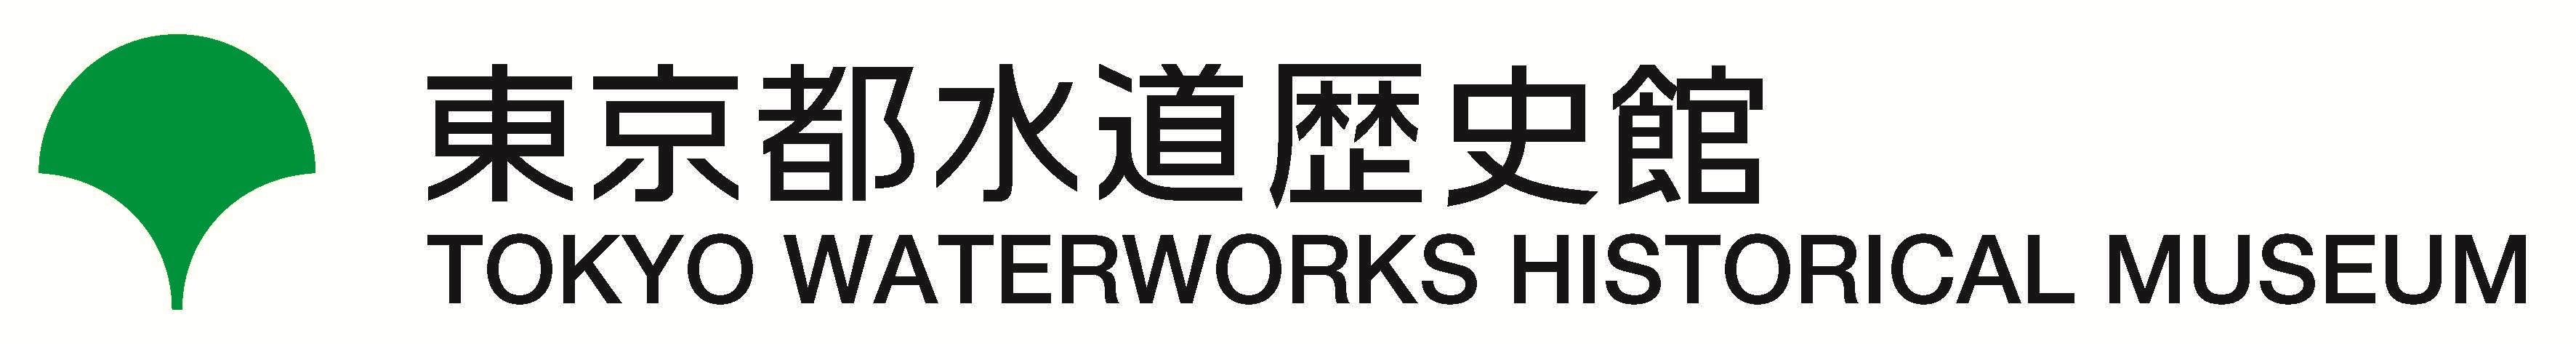 東京都水道歴史館ロゴ